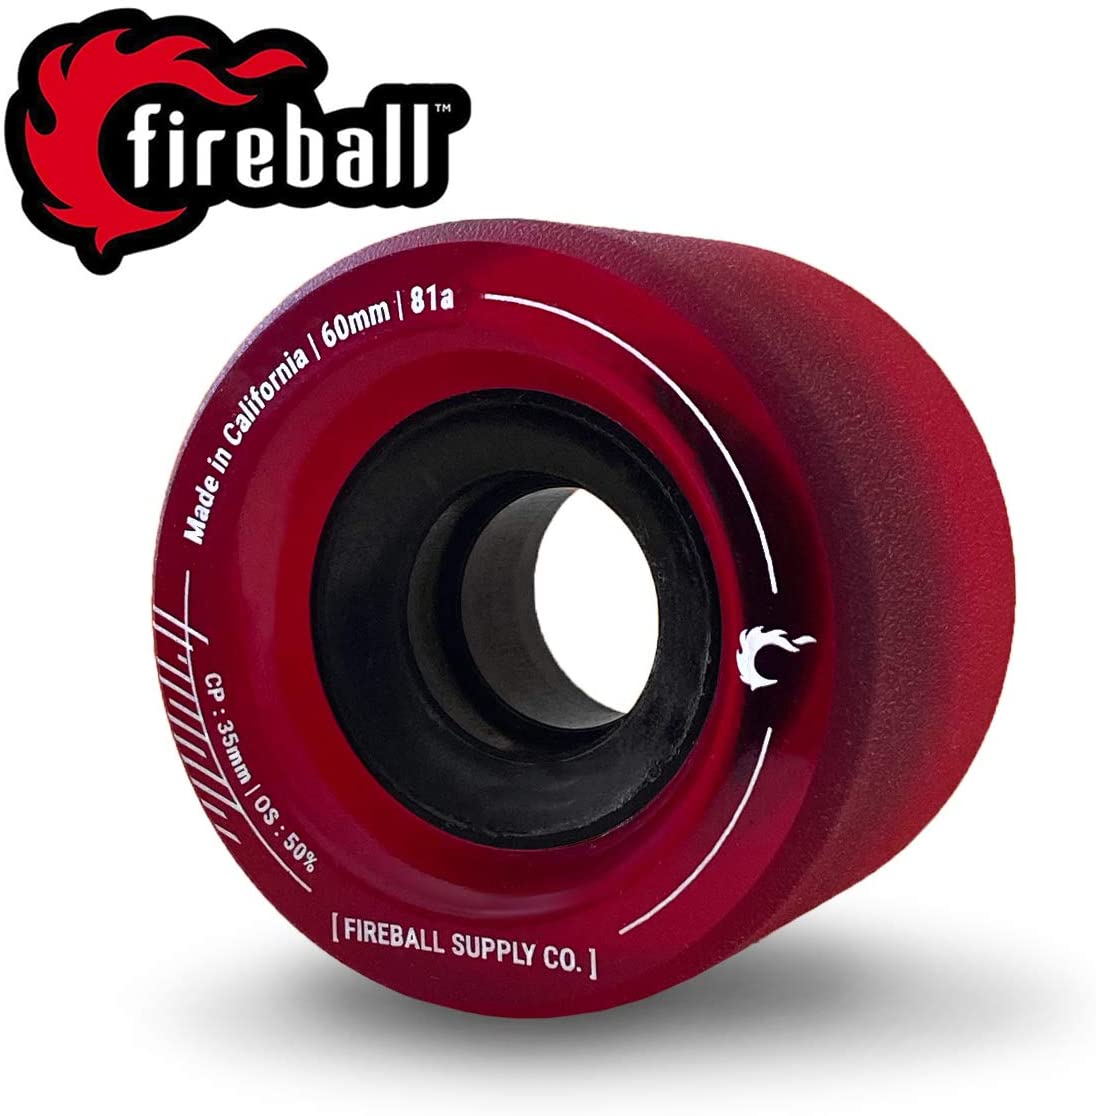 Fireball Tinder 81a 60mm 70mm Skateboard & Longboard Wheels | Set of 4 for Smooth Cruising, Sliding, Dance